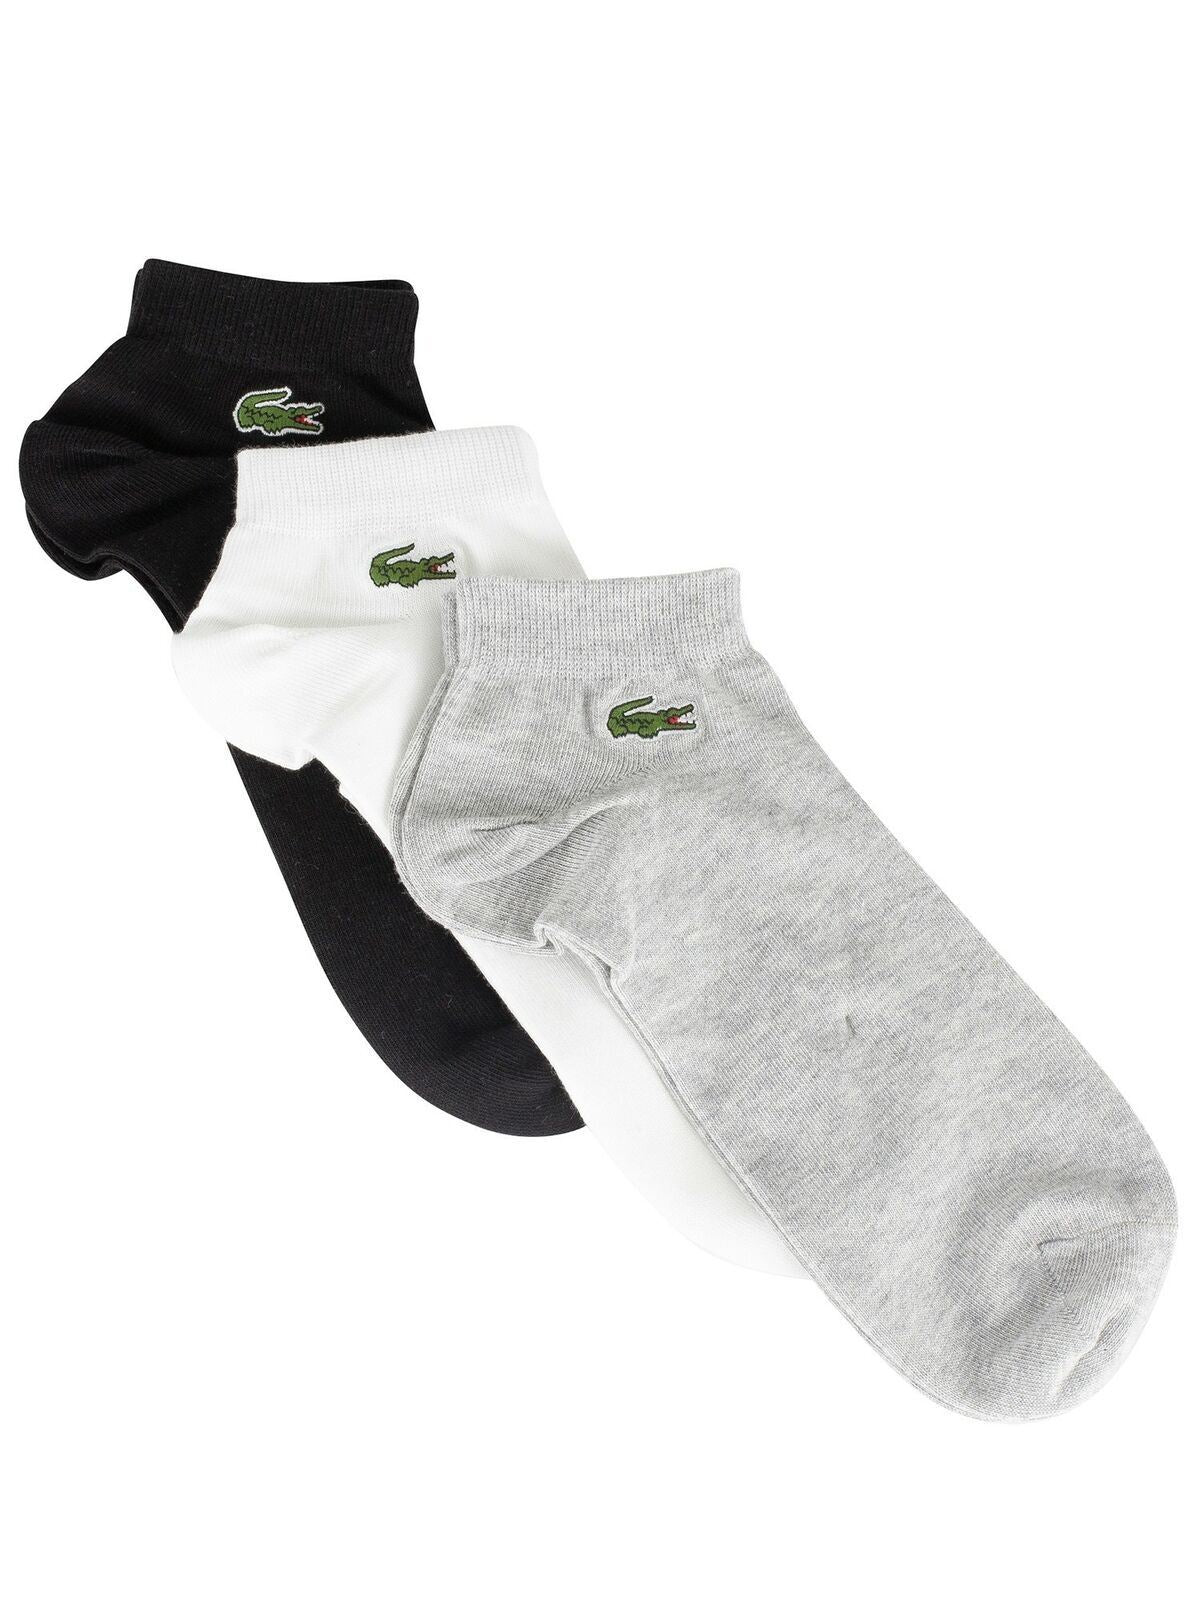 Lacoste Mens Low Cut Ankle Fashion Sport Socks Black Grey & White